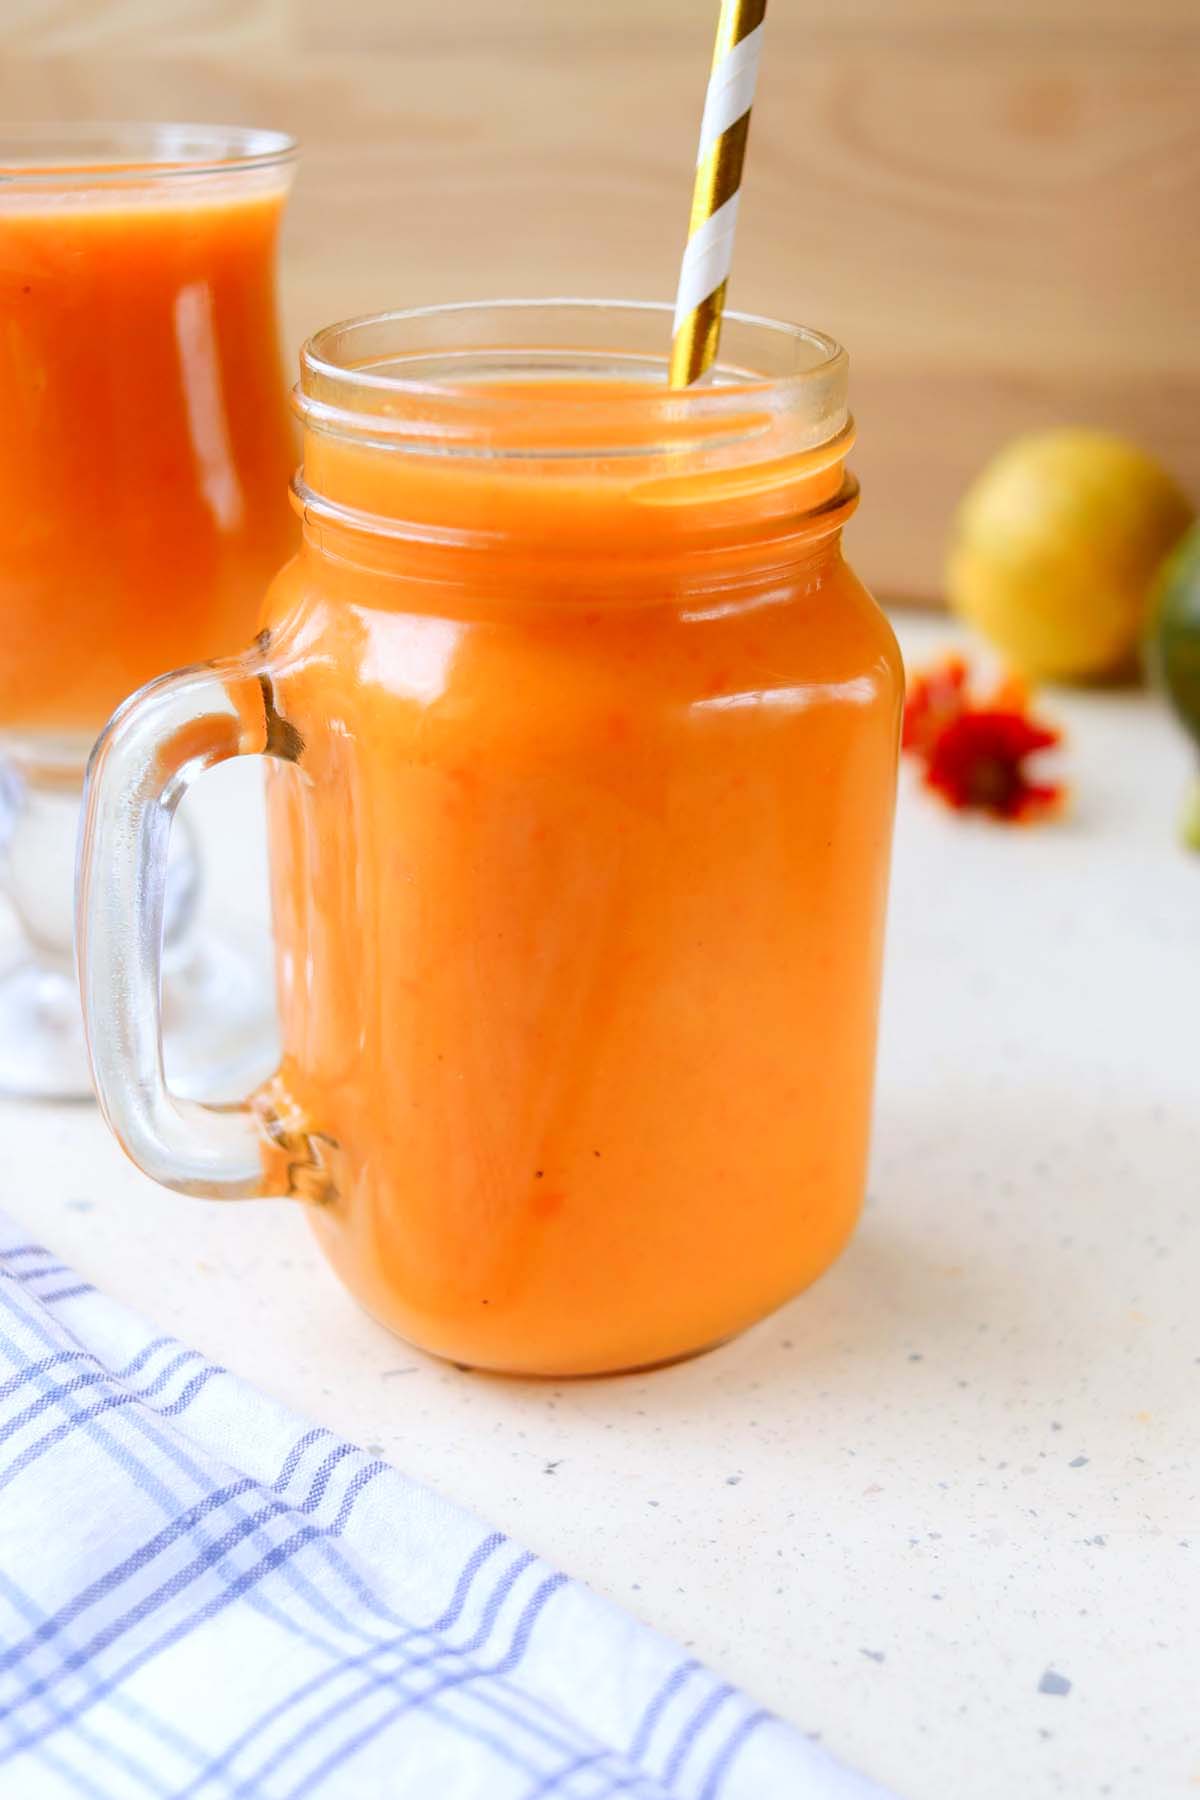 pumpkin smoothie in a jar with a straw.